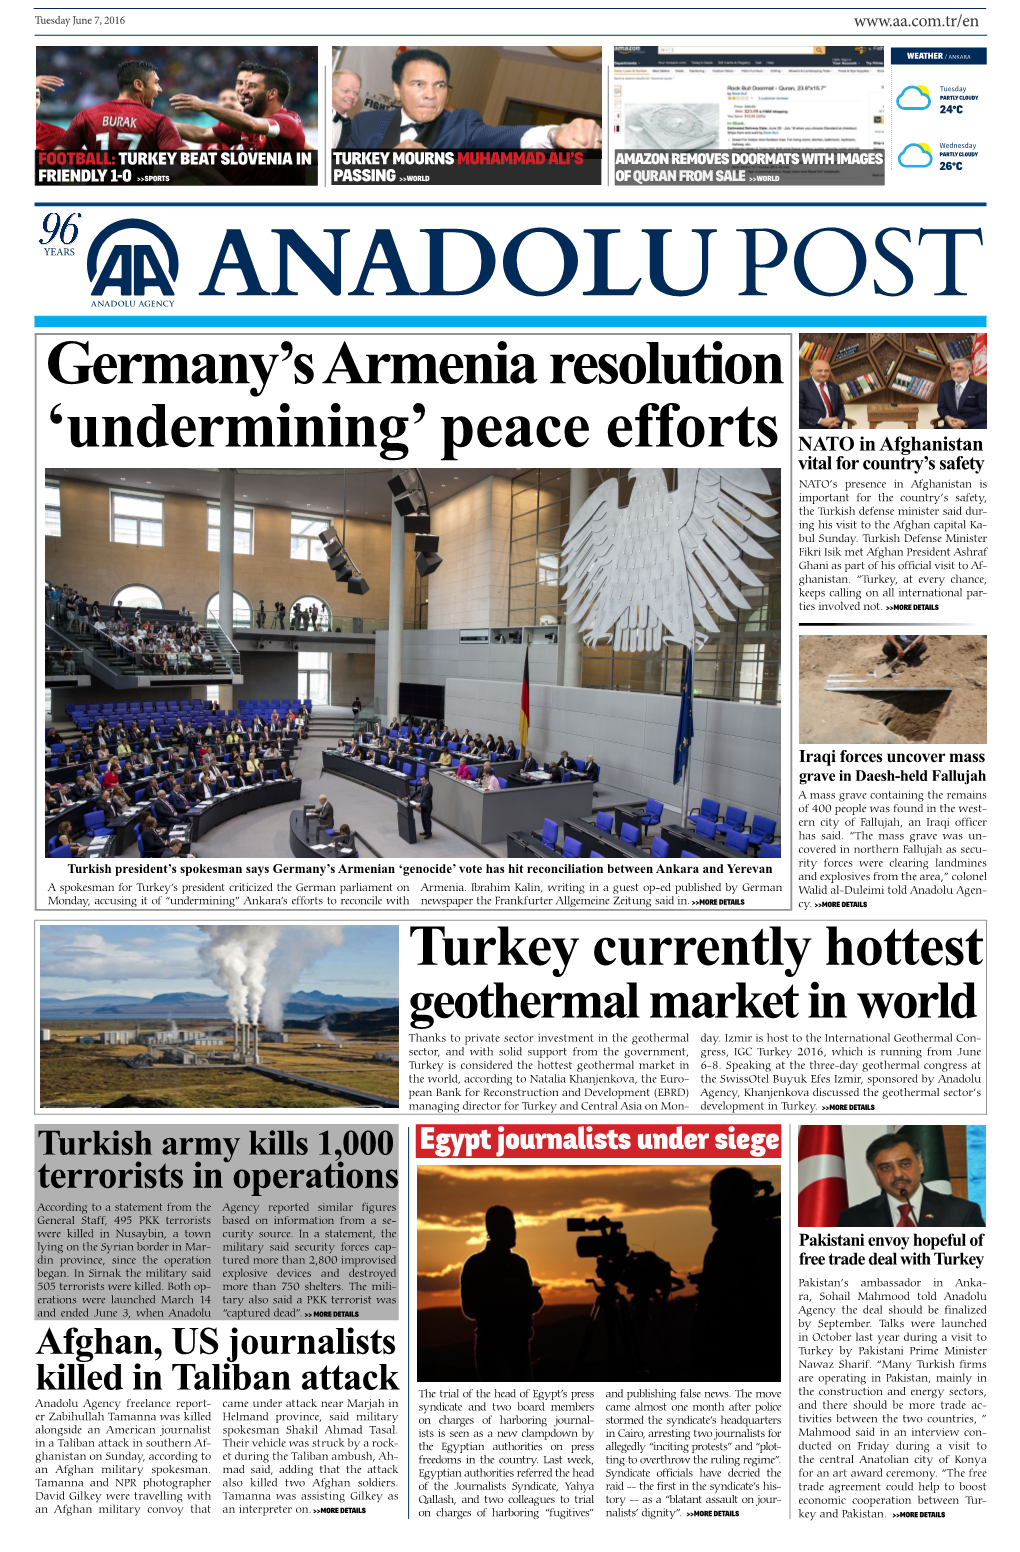 Germany's Armenia Resolution